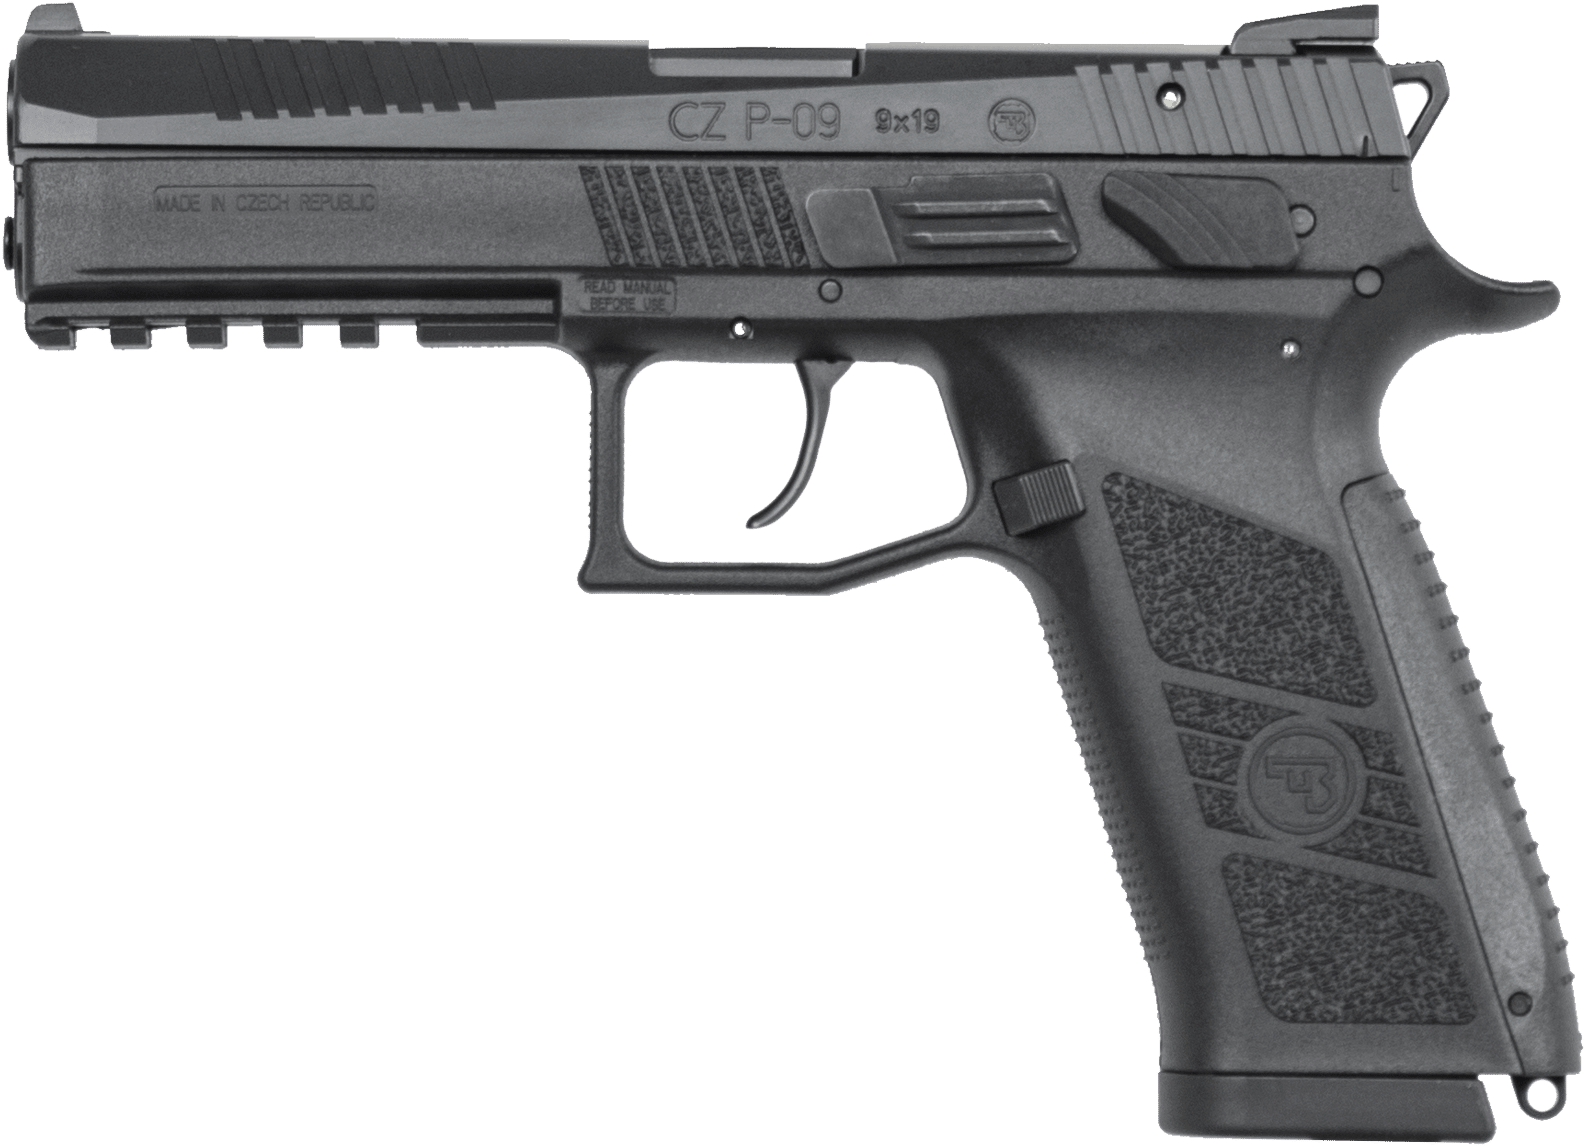 C Z P09 Semi Automatic Pistol